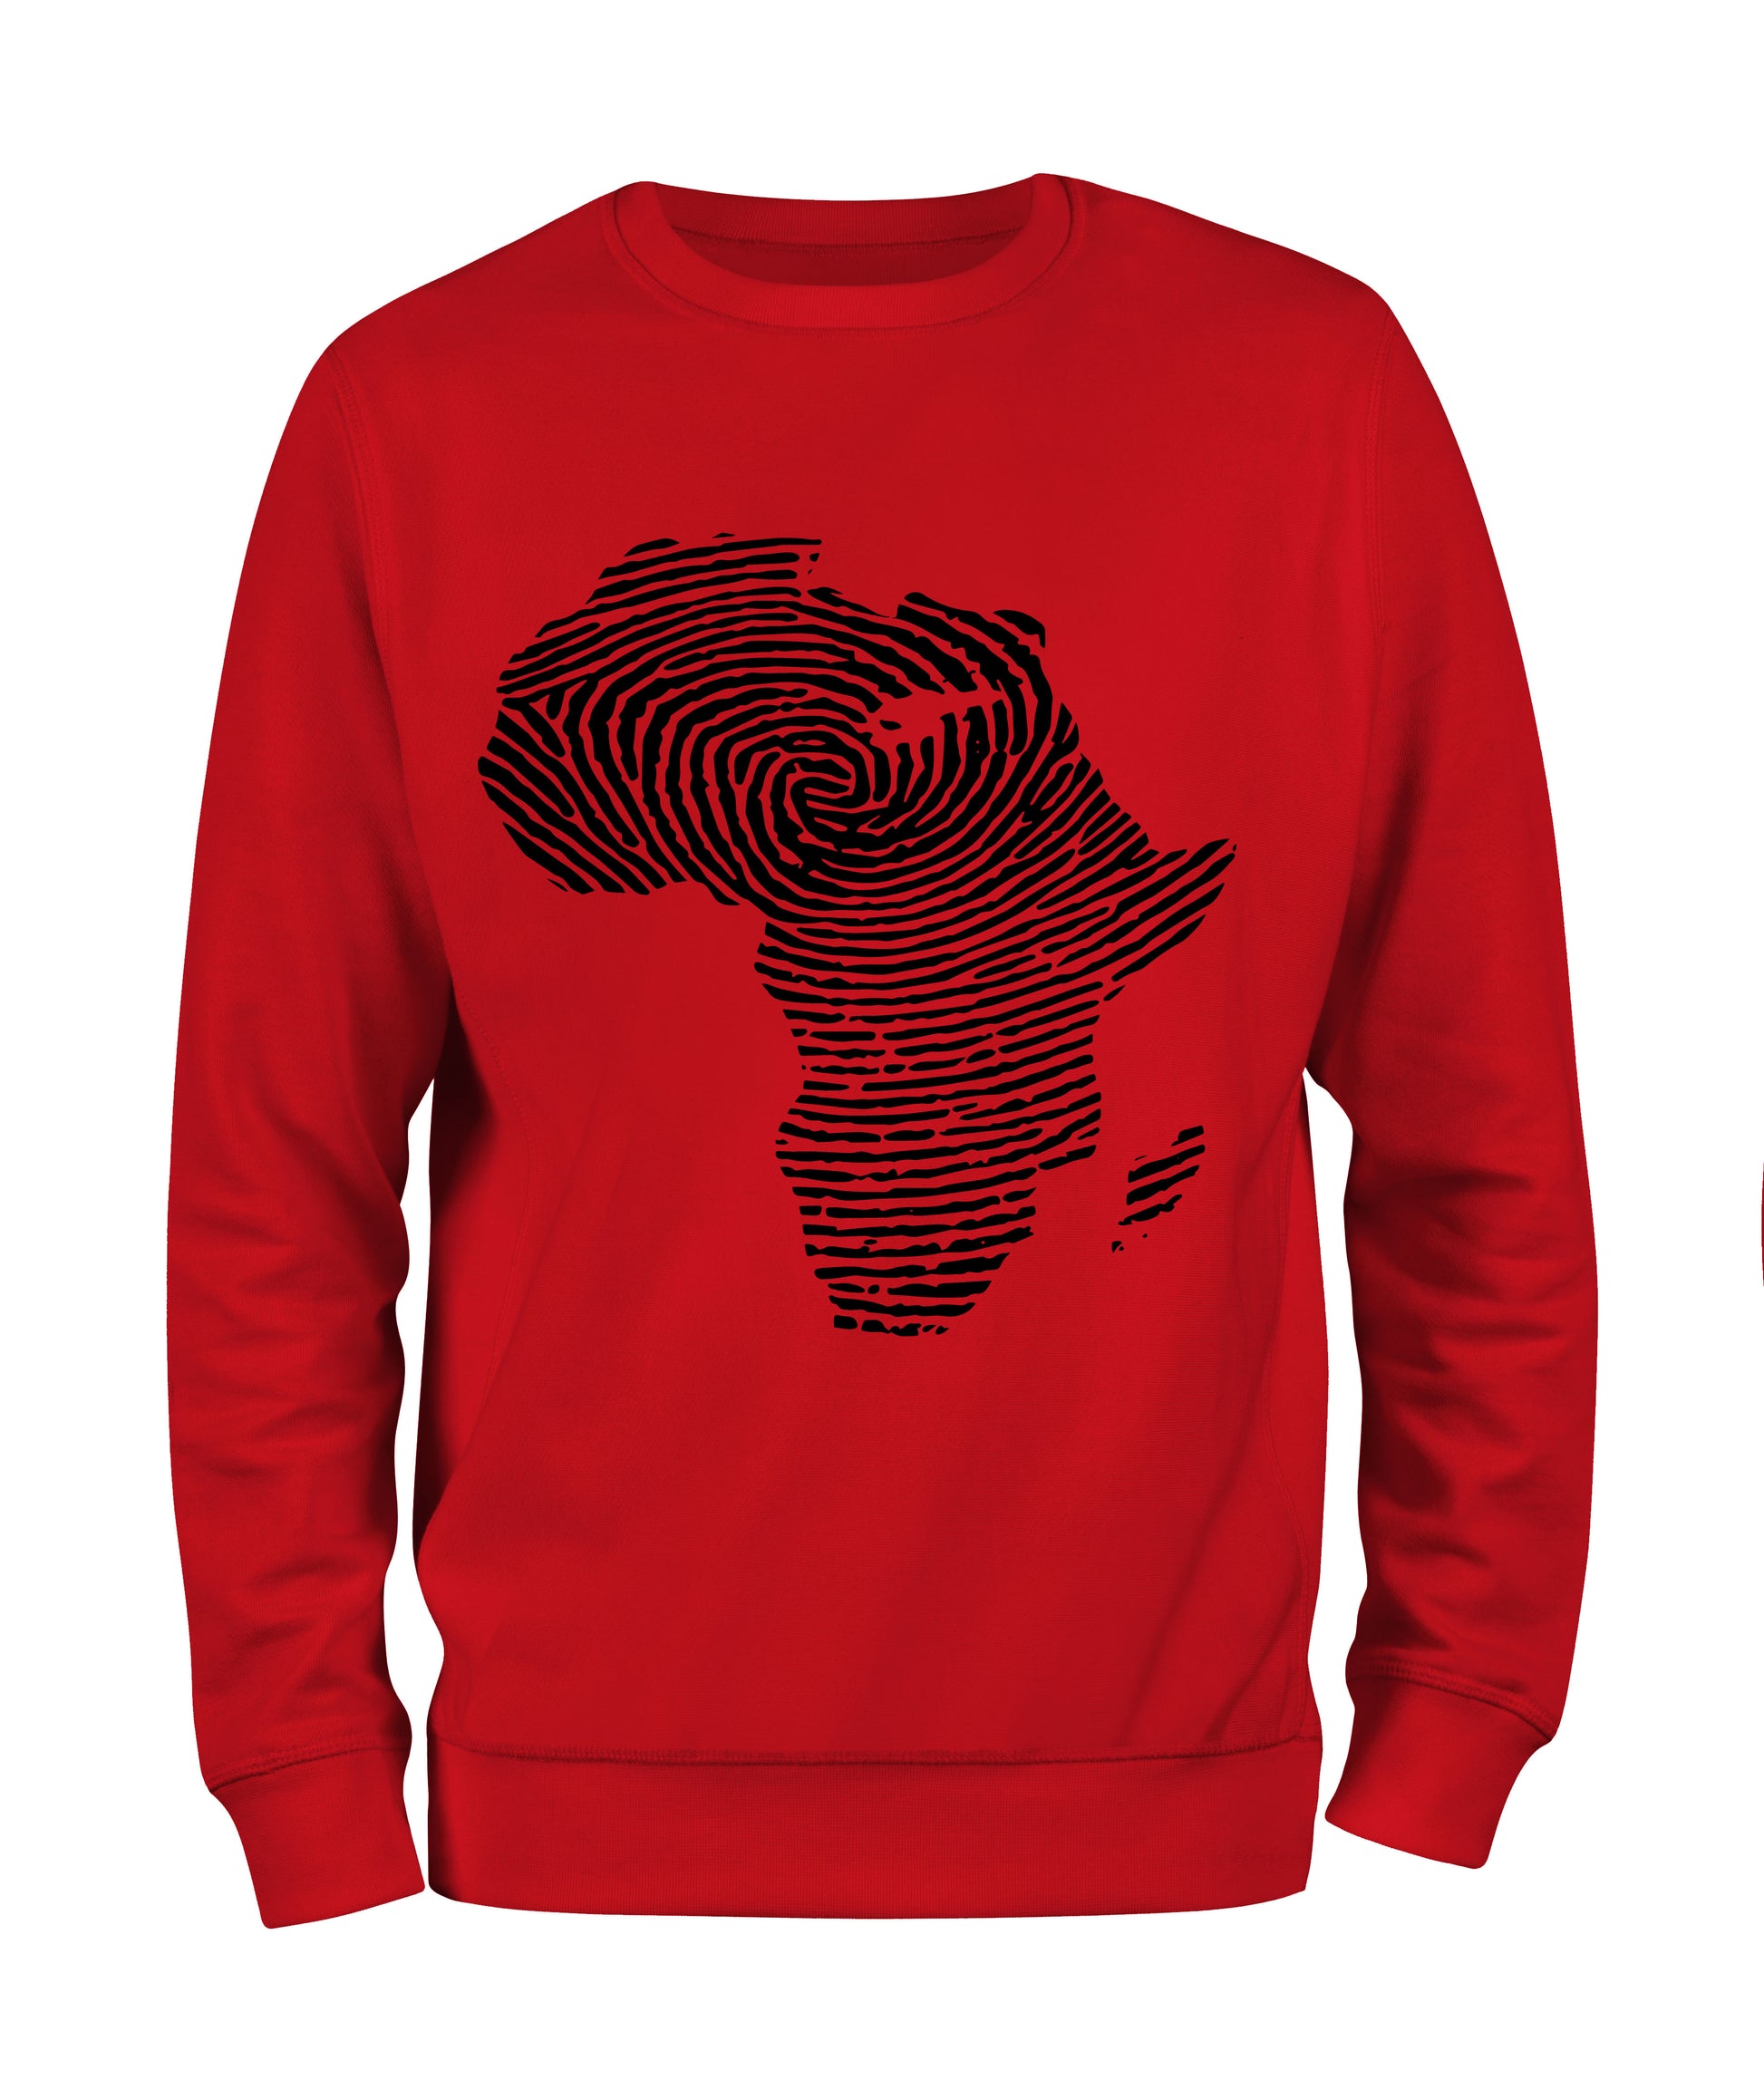 Africa Finger Print Sweatshirt - Black10.com